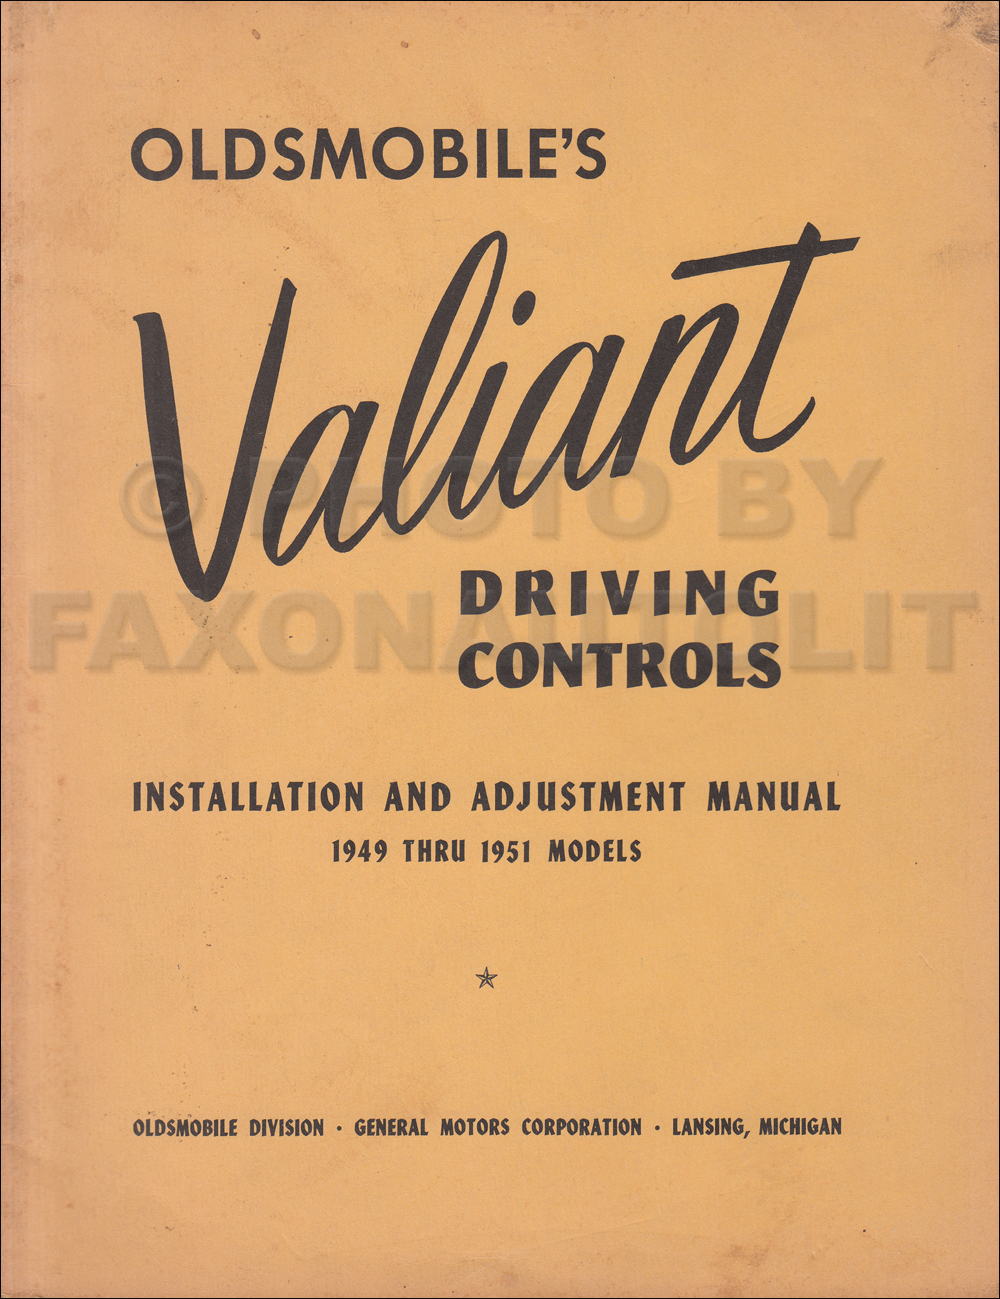 1949-1951 Oldsmobile Valiant Driving Controls Installation and Adjustment Manual Original